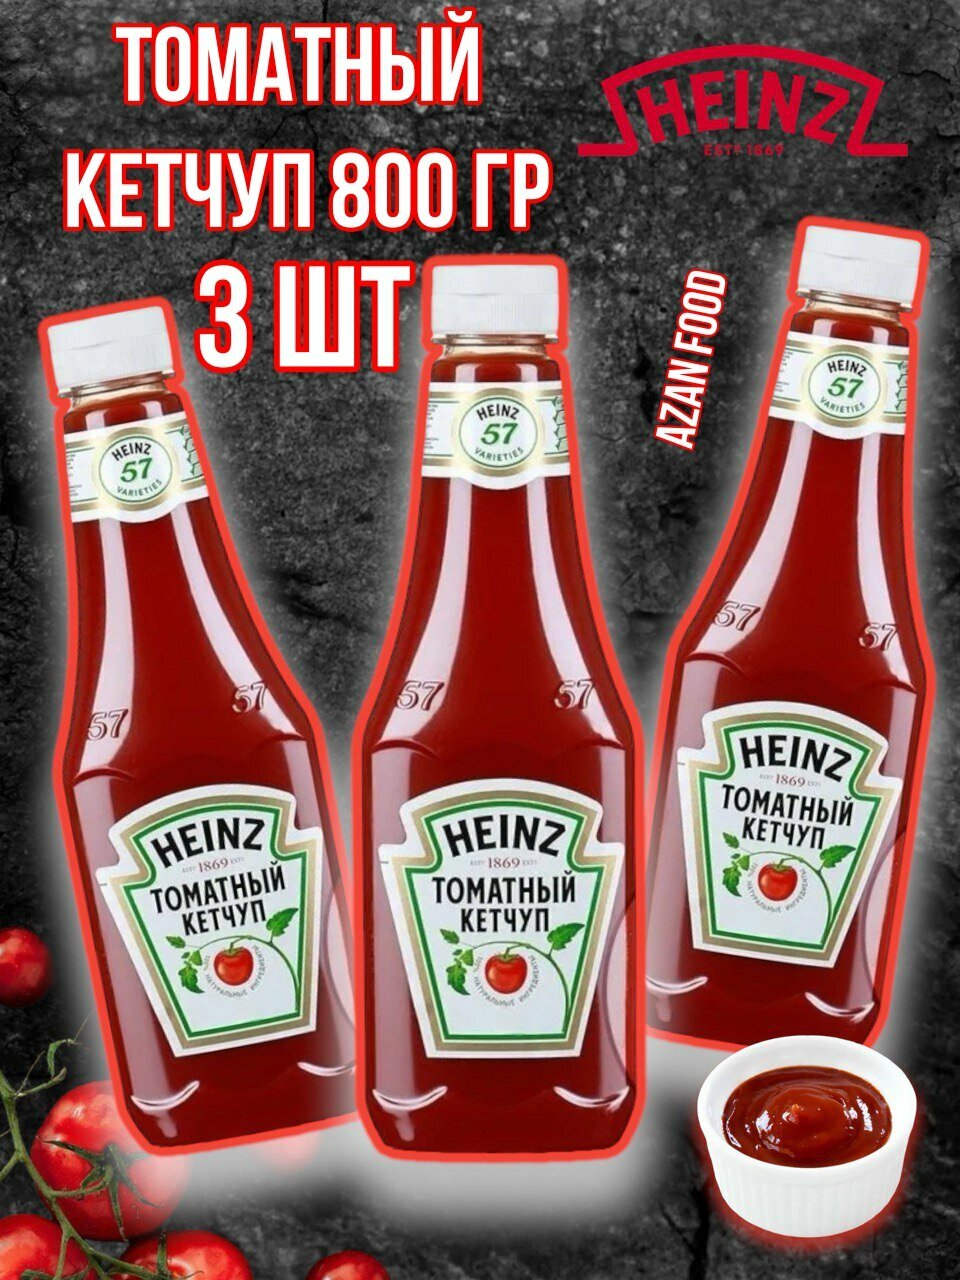 Кетчуп томатный 800 гр 3 шт